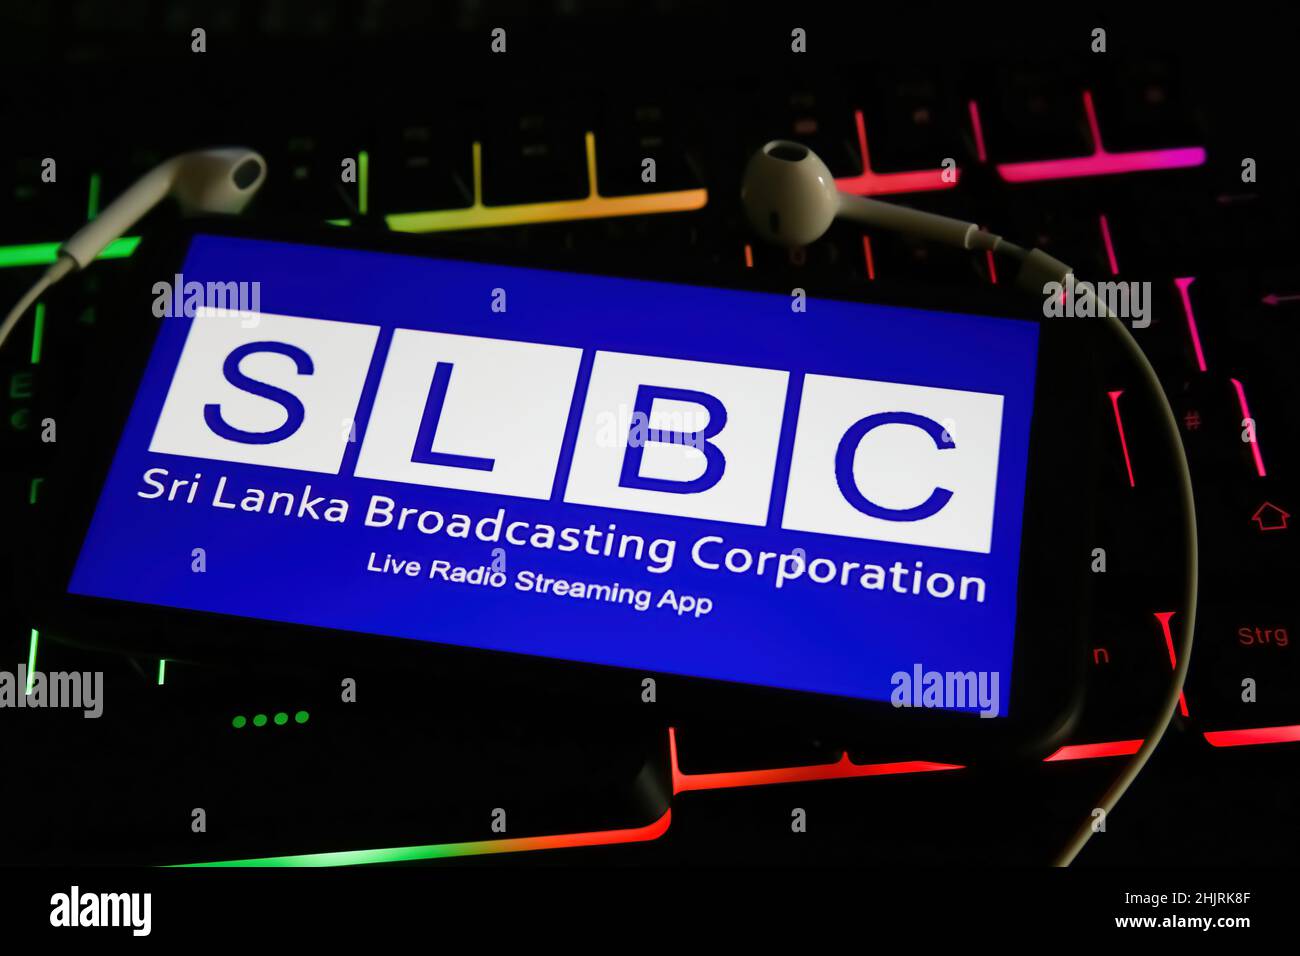 Sri lanka broadcasting corporation hi-res stock photography and images -  Alamy